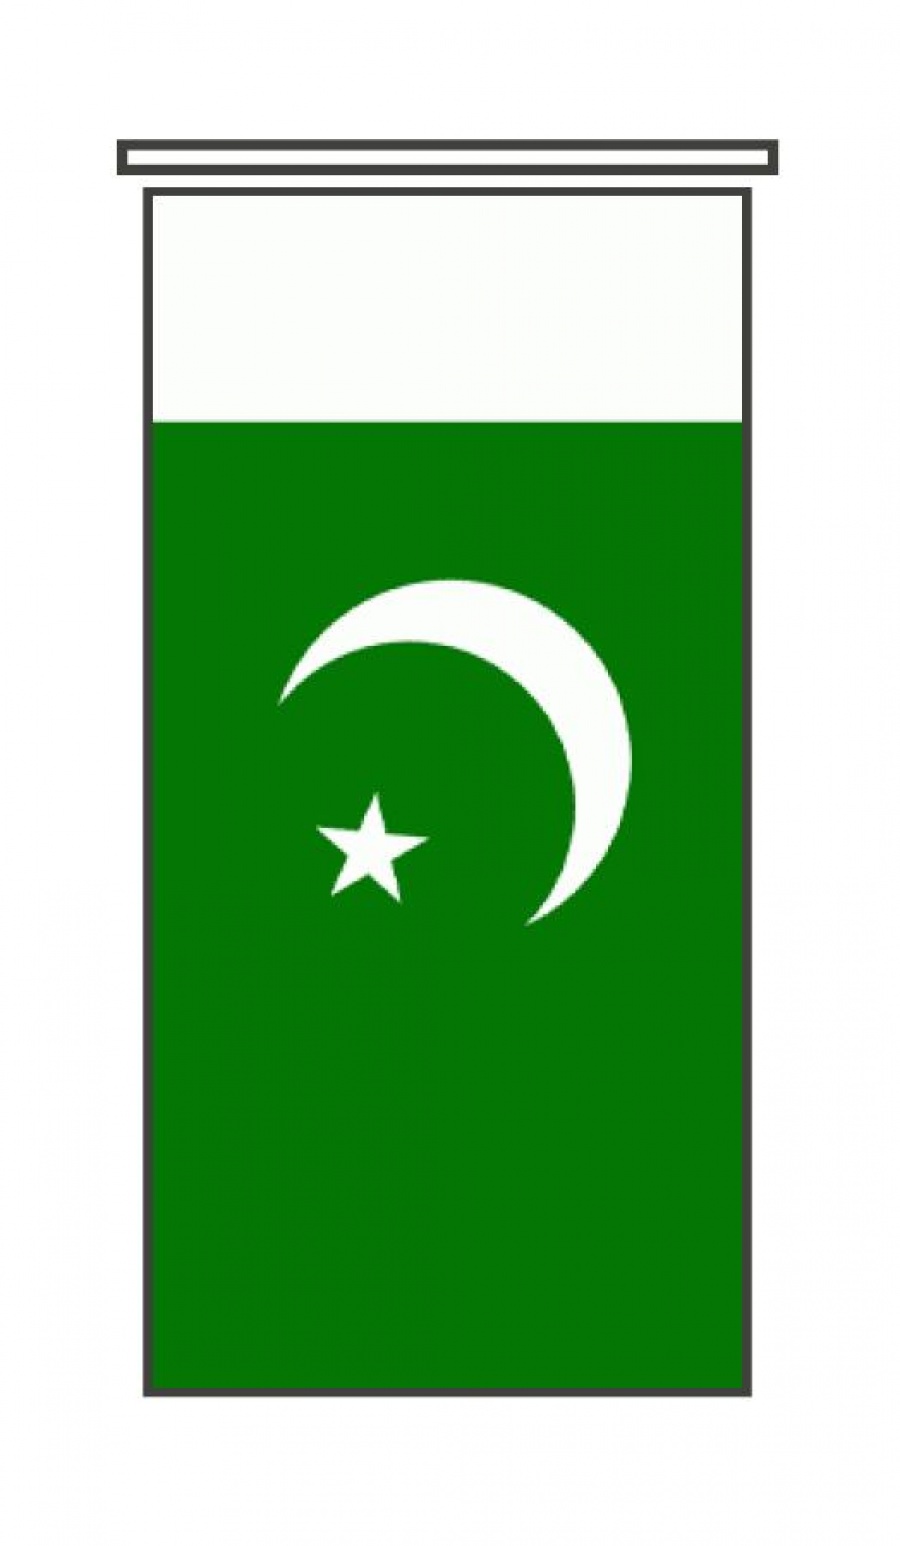 banner-pakistan-fahnen-baans